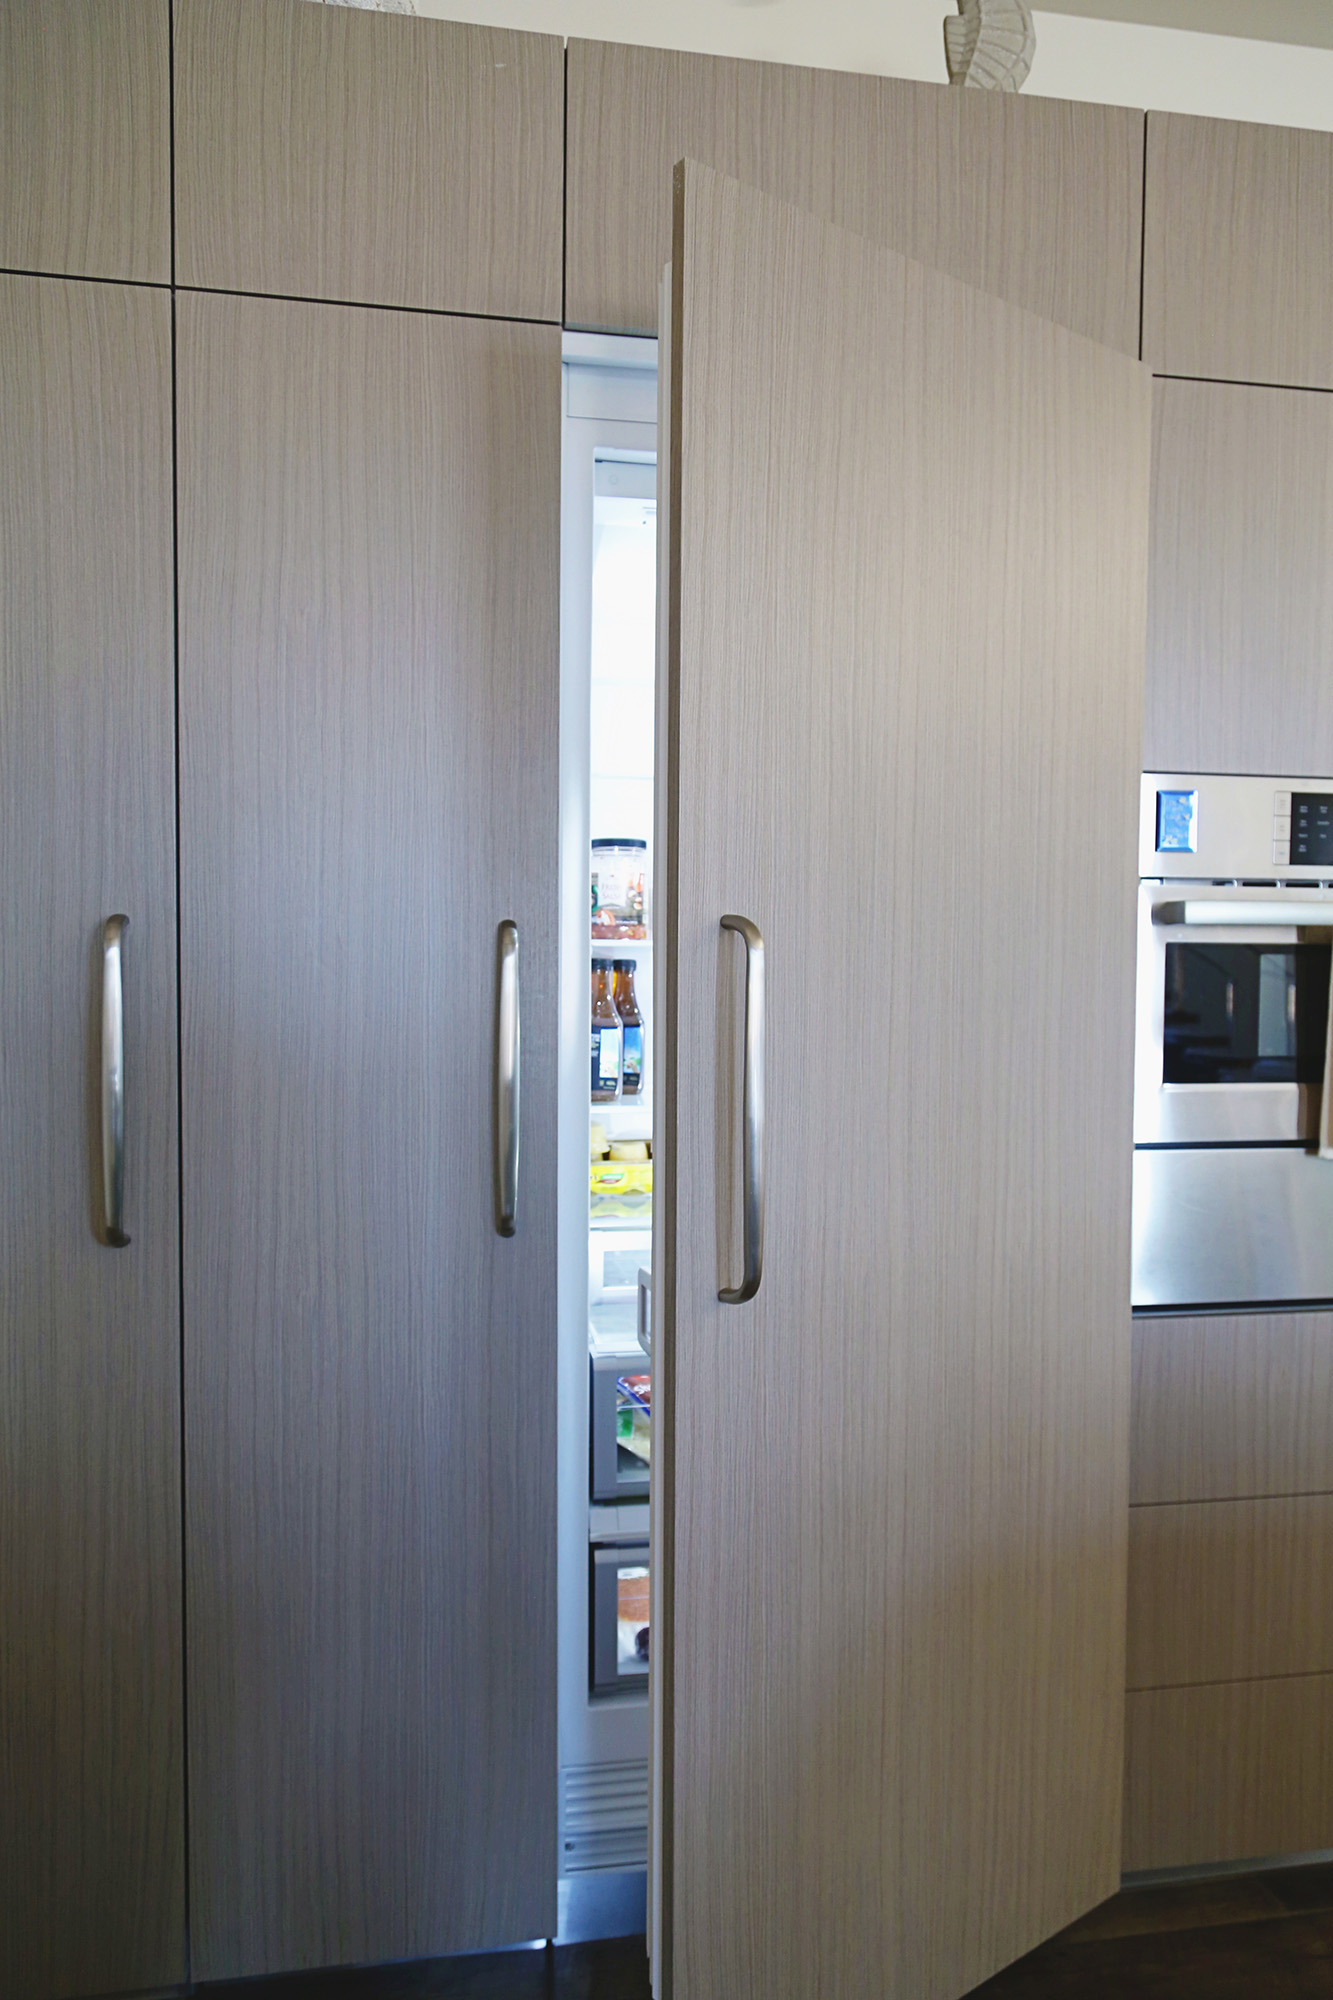 Tall Storage Freezer Refrigerator Ovens Wood Grain Cabinet Finish Wood Floor Elite Cabinets Tulsa Kitchen Cabinet Designer